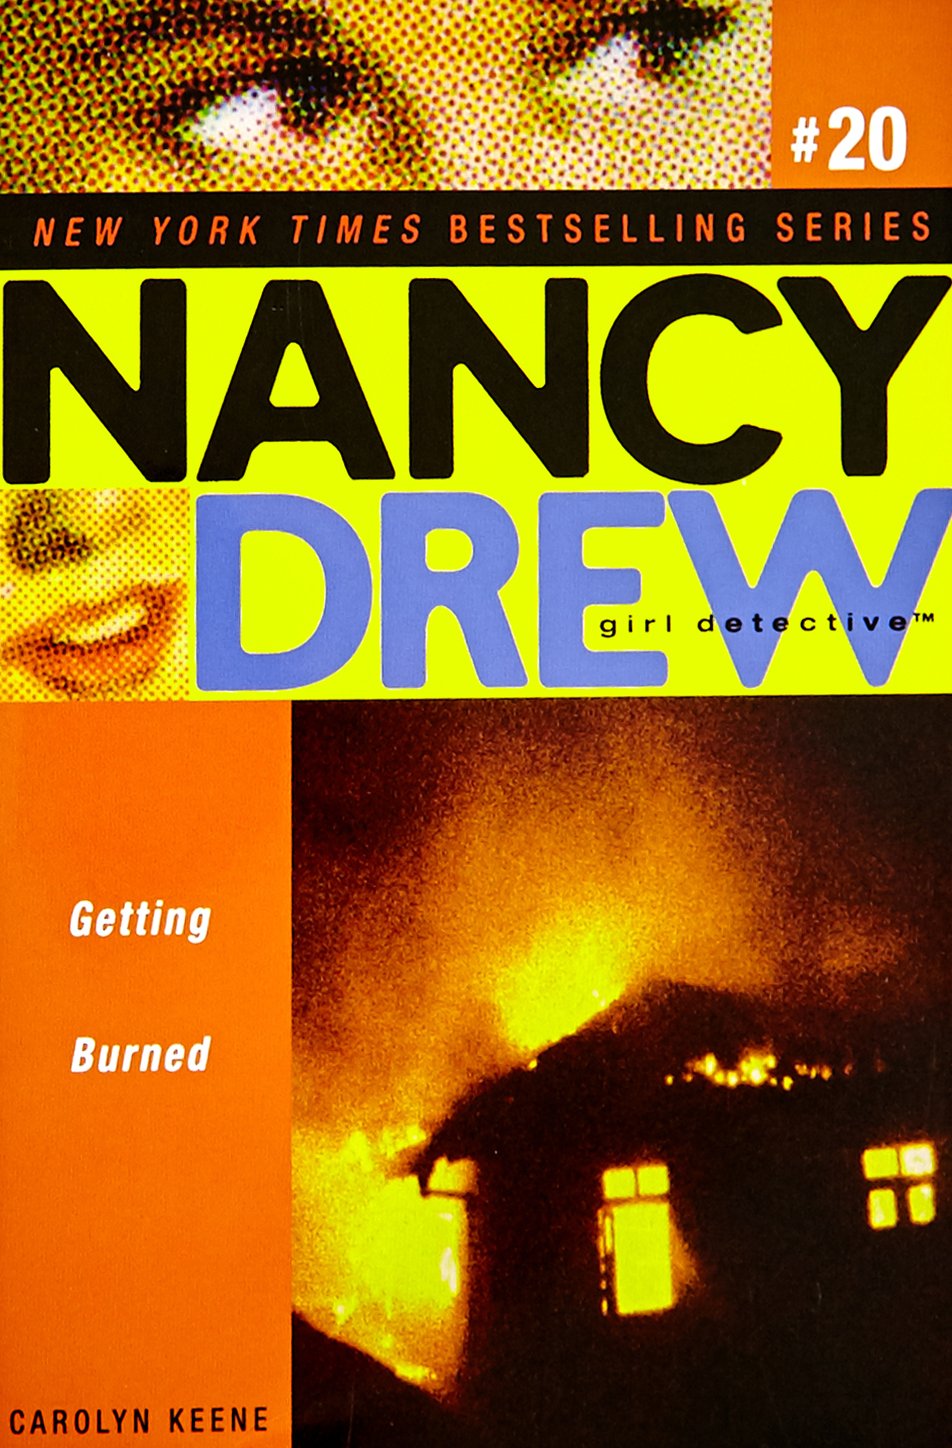 Nancy Drew Getting Burned # 20